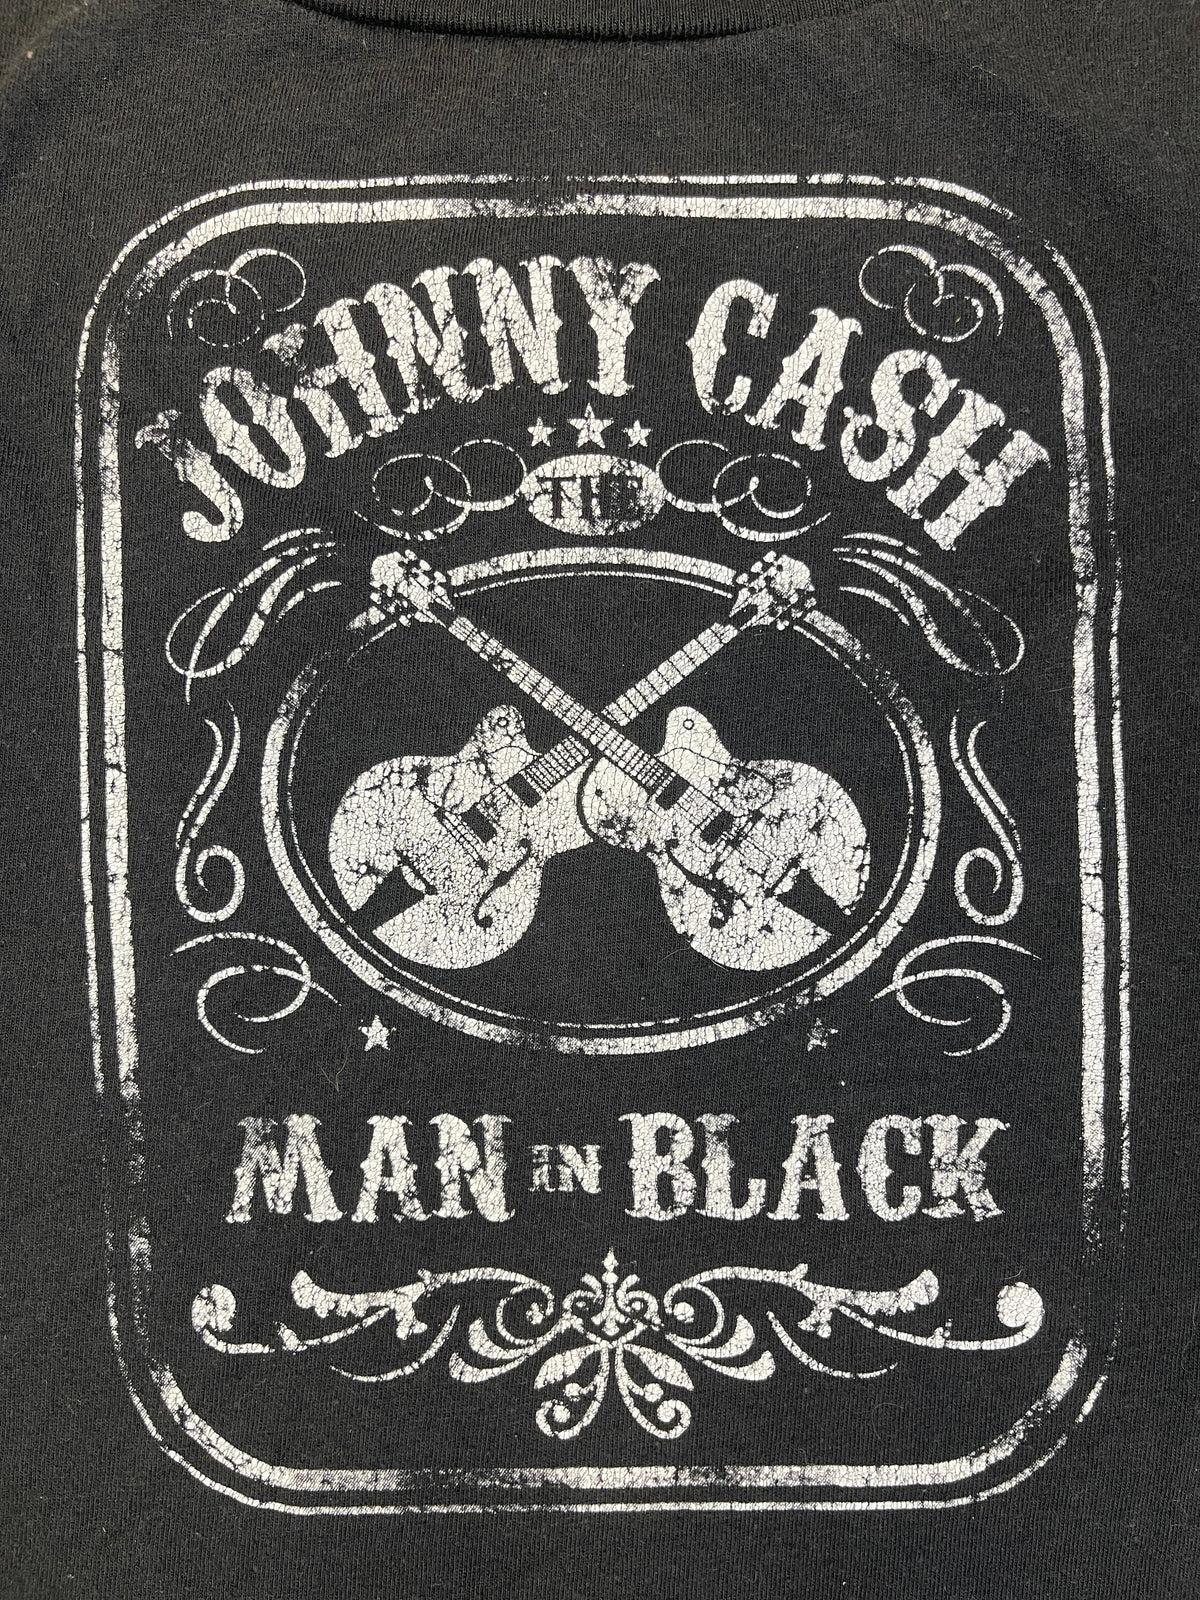 Johnny Cash Man in Black T-Shirt Toddler 4T